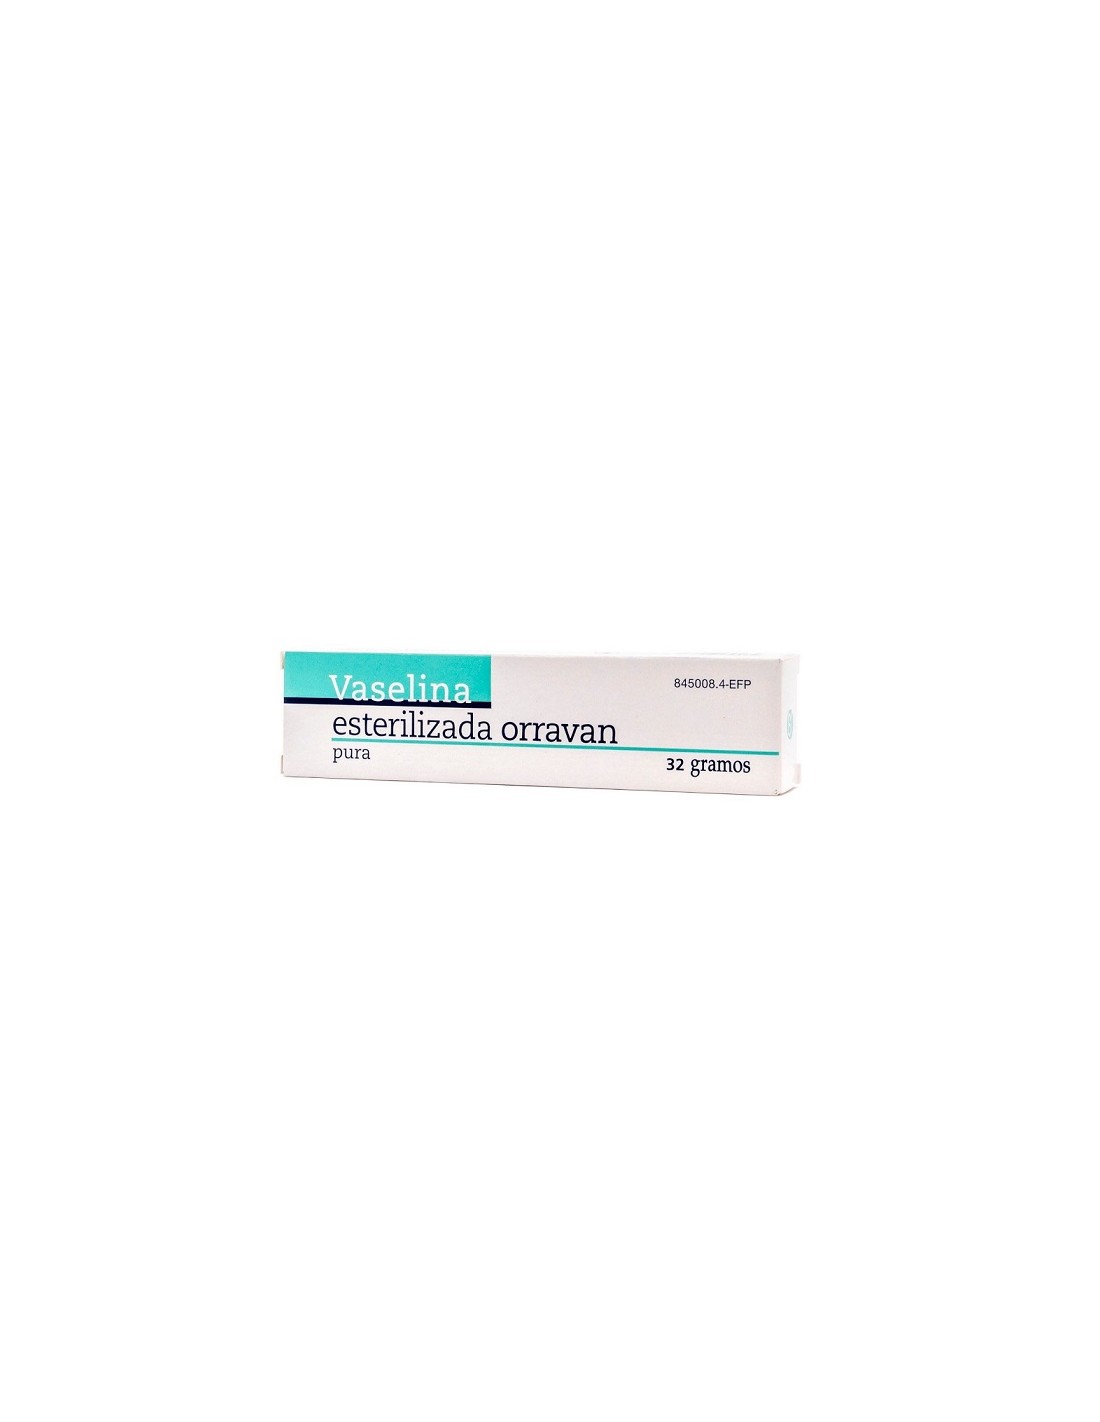 Farmacia Fuentelucha  Perspirex Comfort Roll-on Antitranspirante 20ml